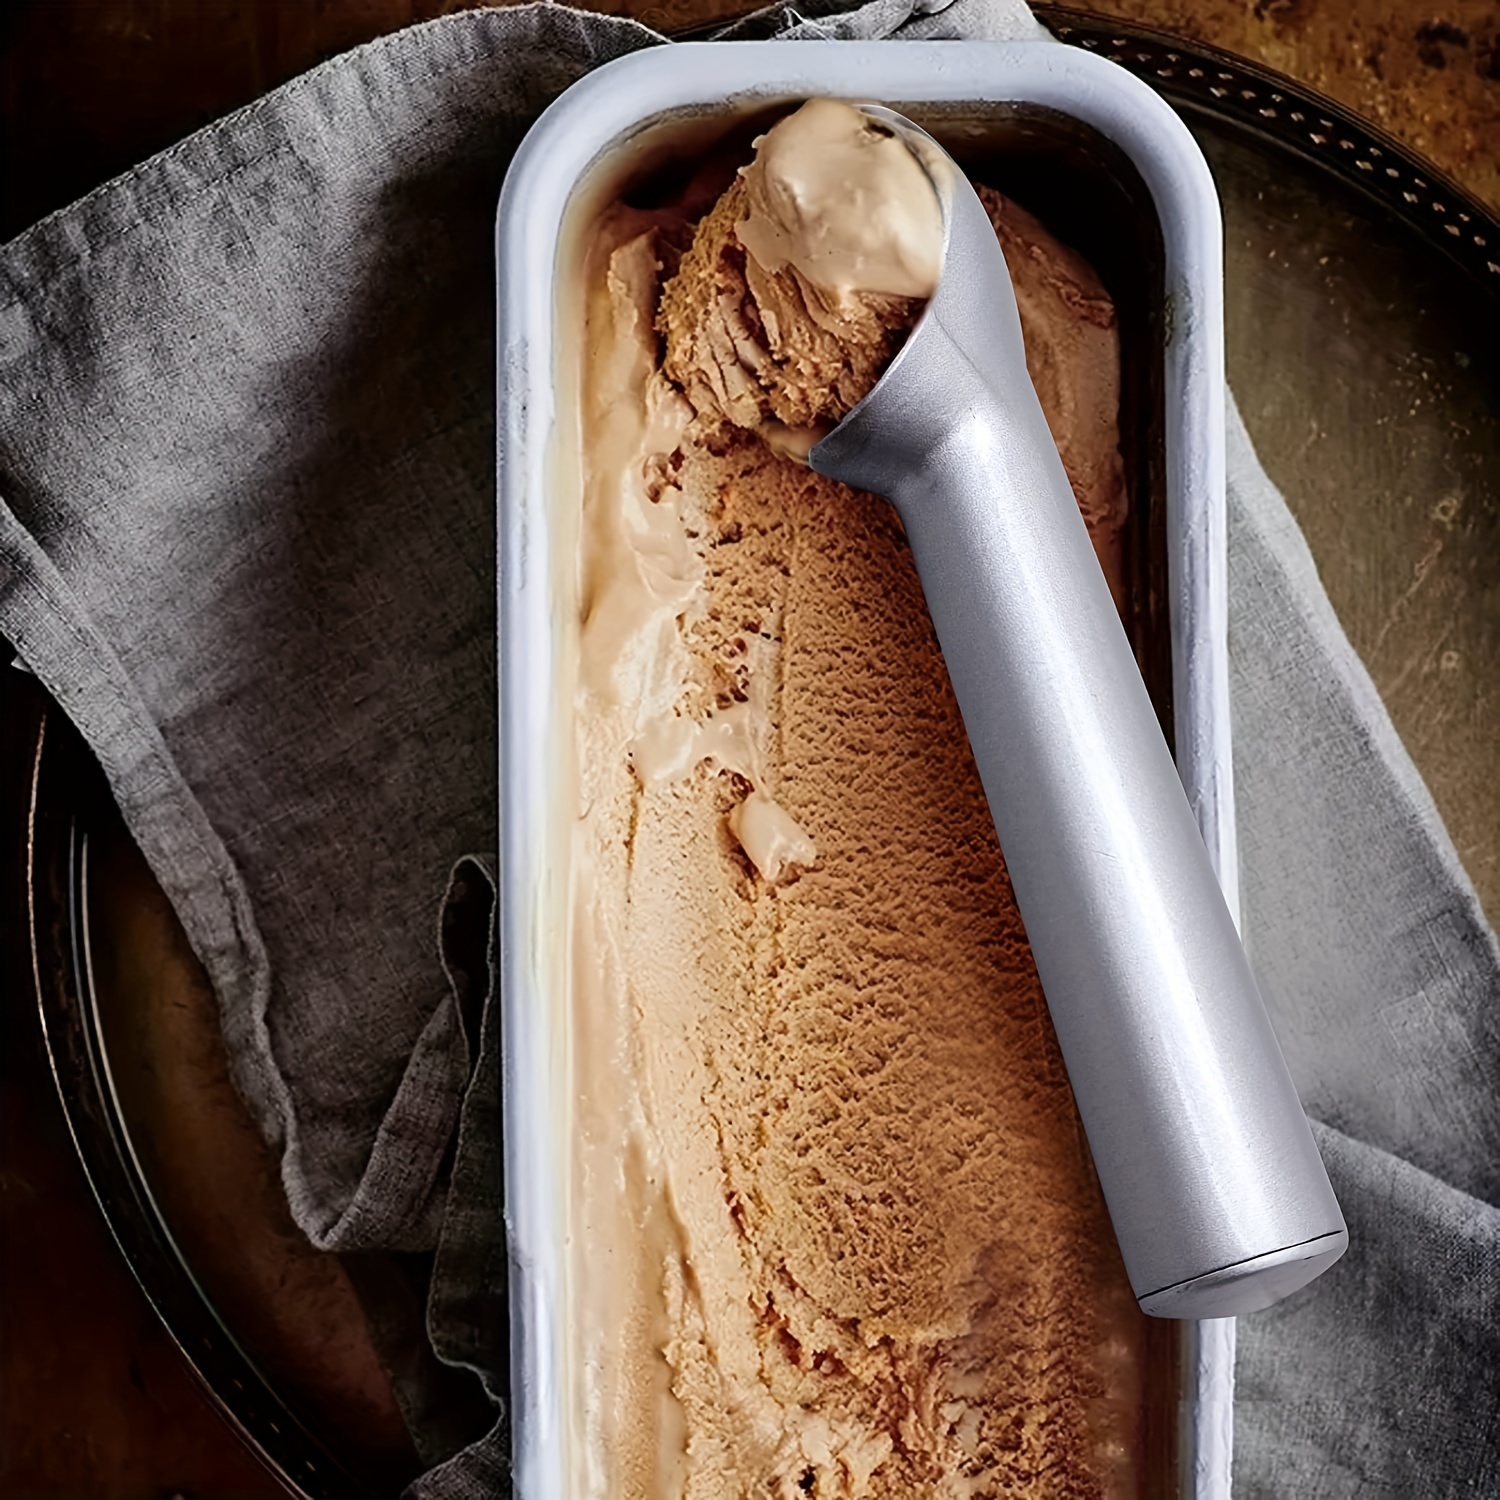 Premium Stainless Steel Ice Cream Scoop with Trigger Fruit Scoop Perfect  for Frozen Yogurt Sundae Ice